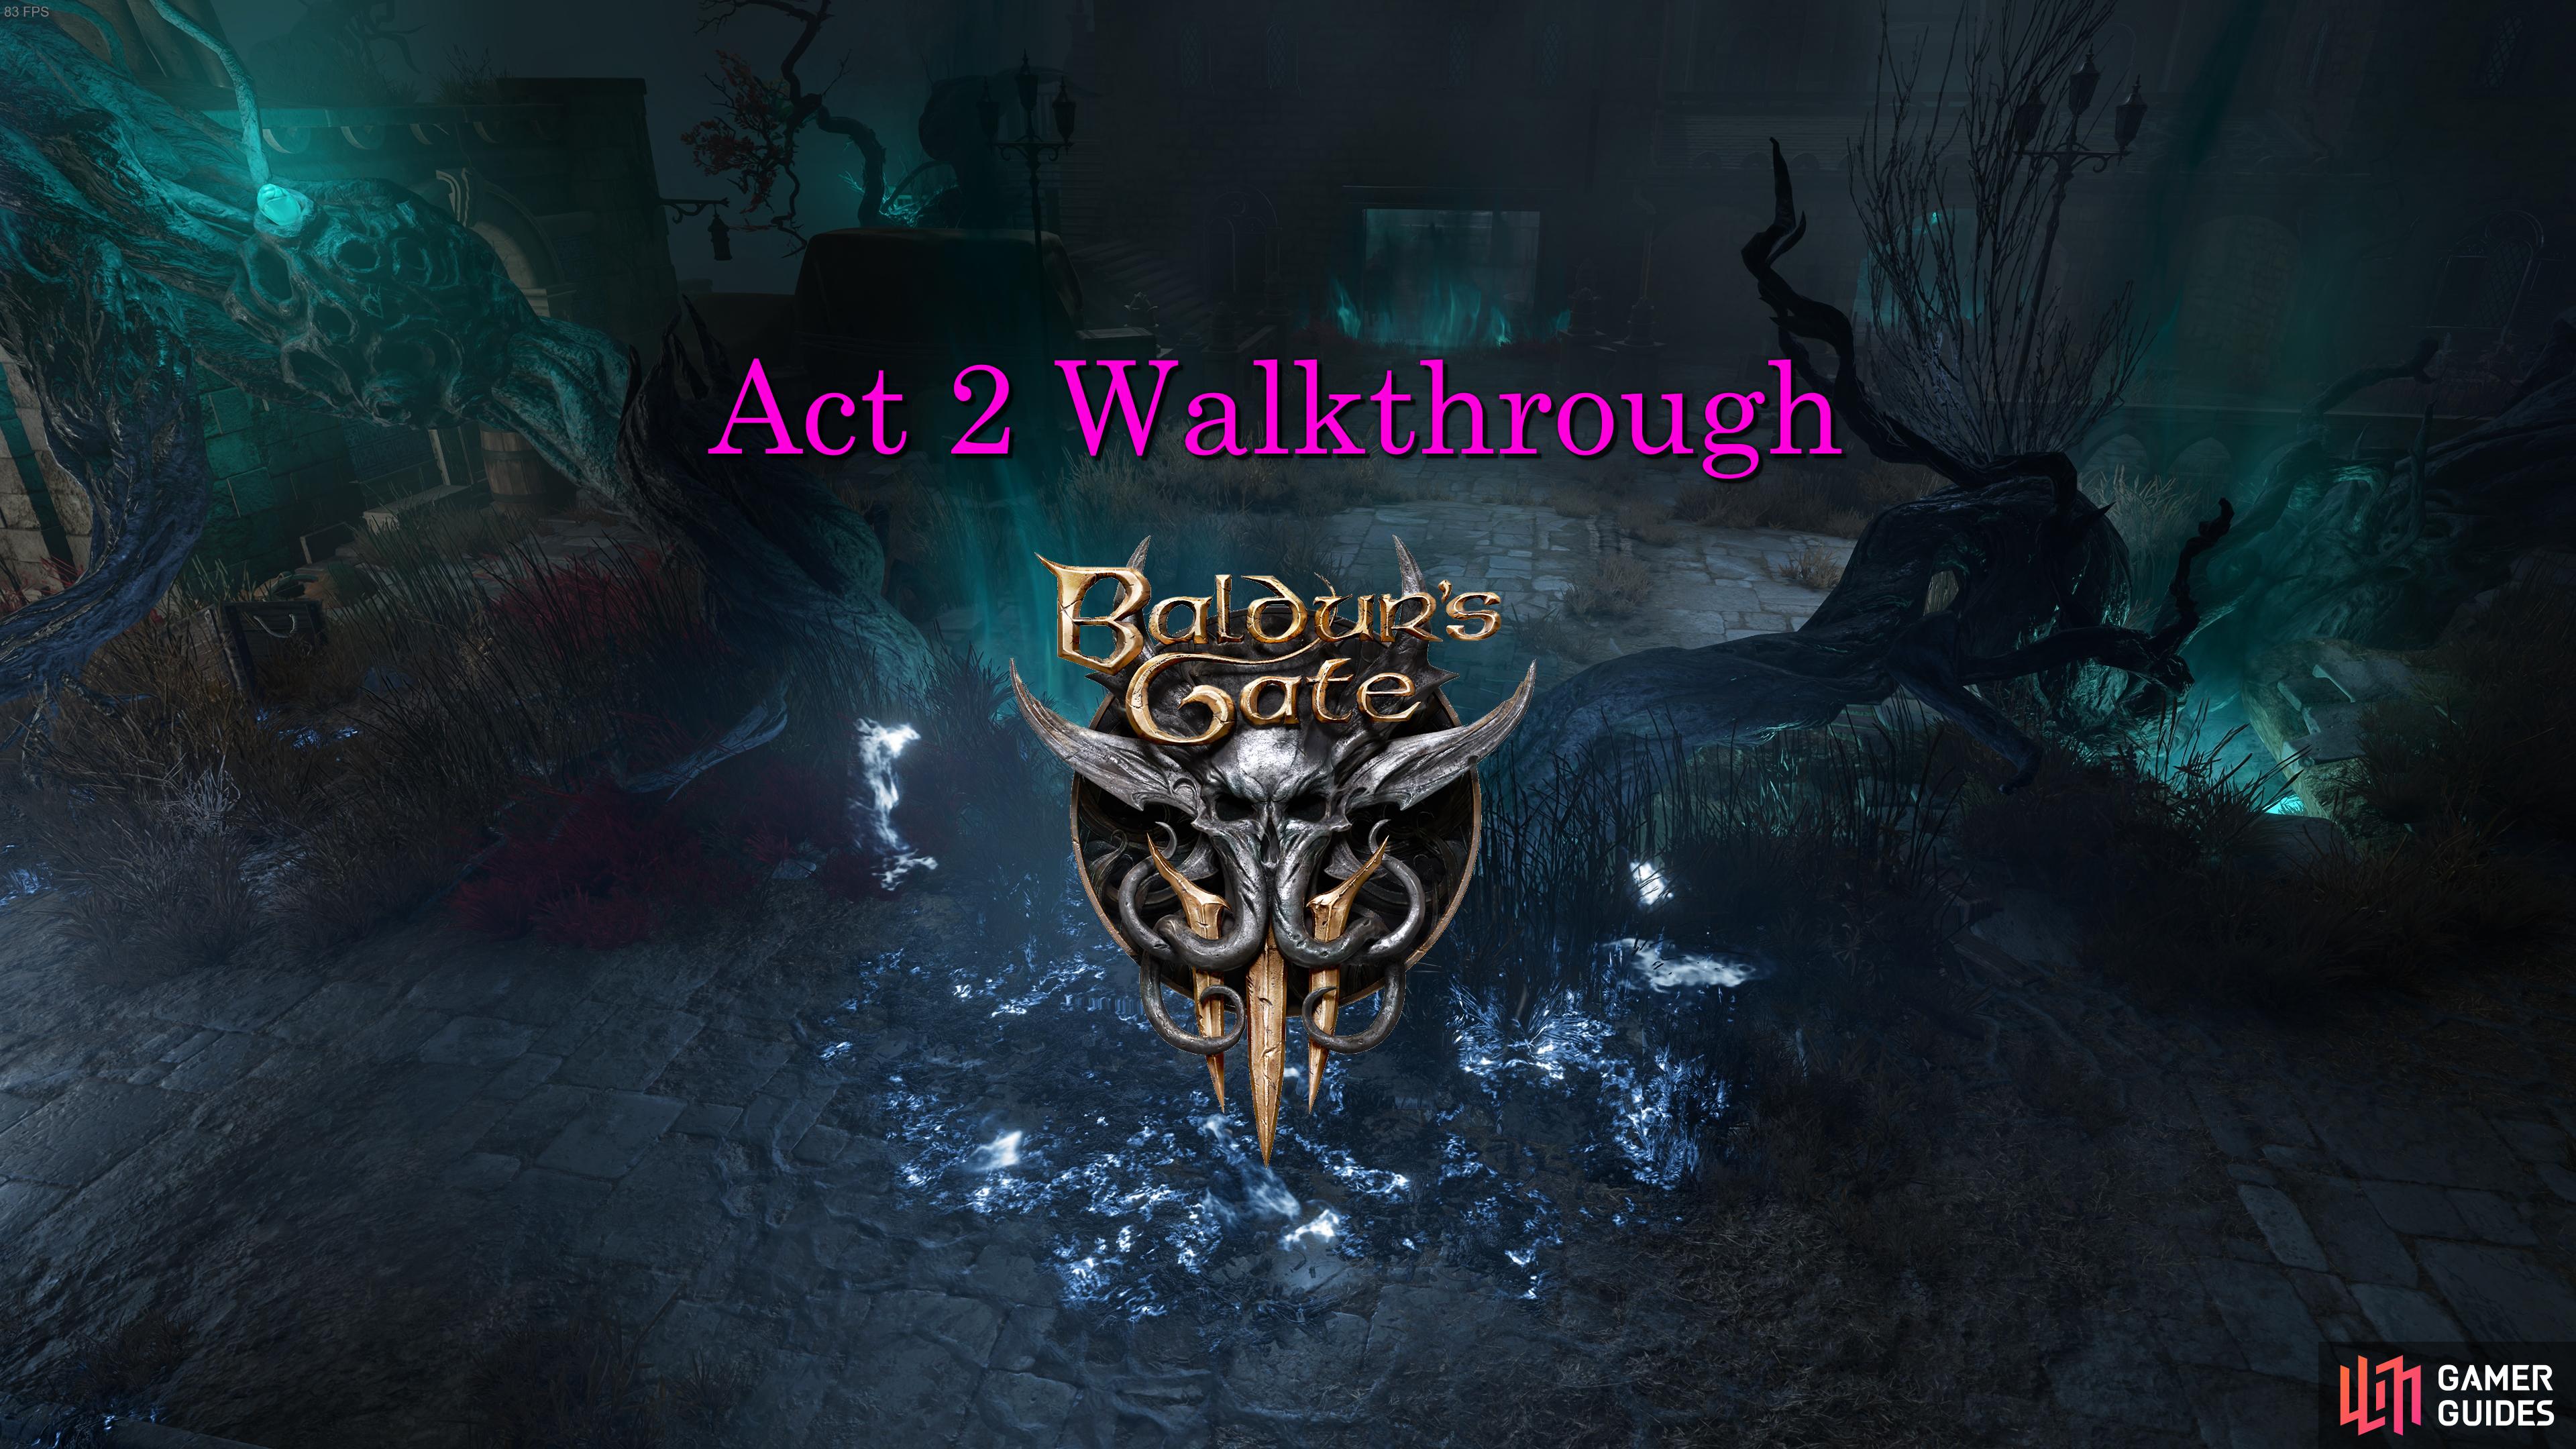 Complete Act 2 Walkthrough in Baldur’s Gate 3.